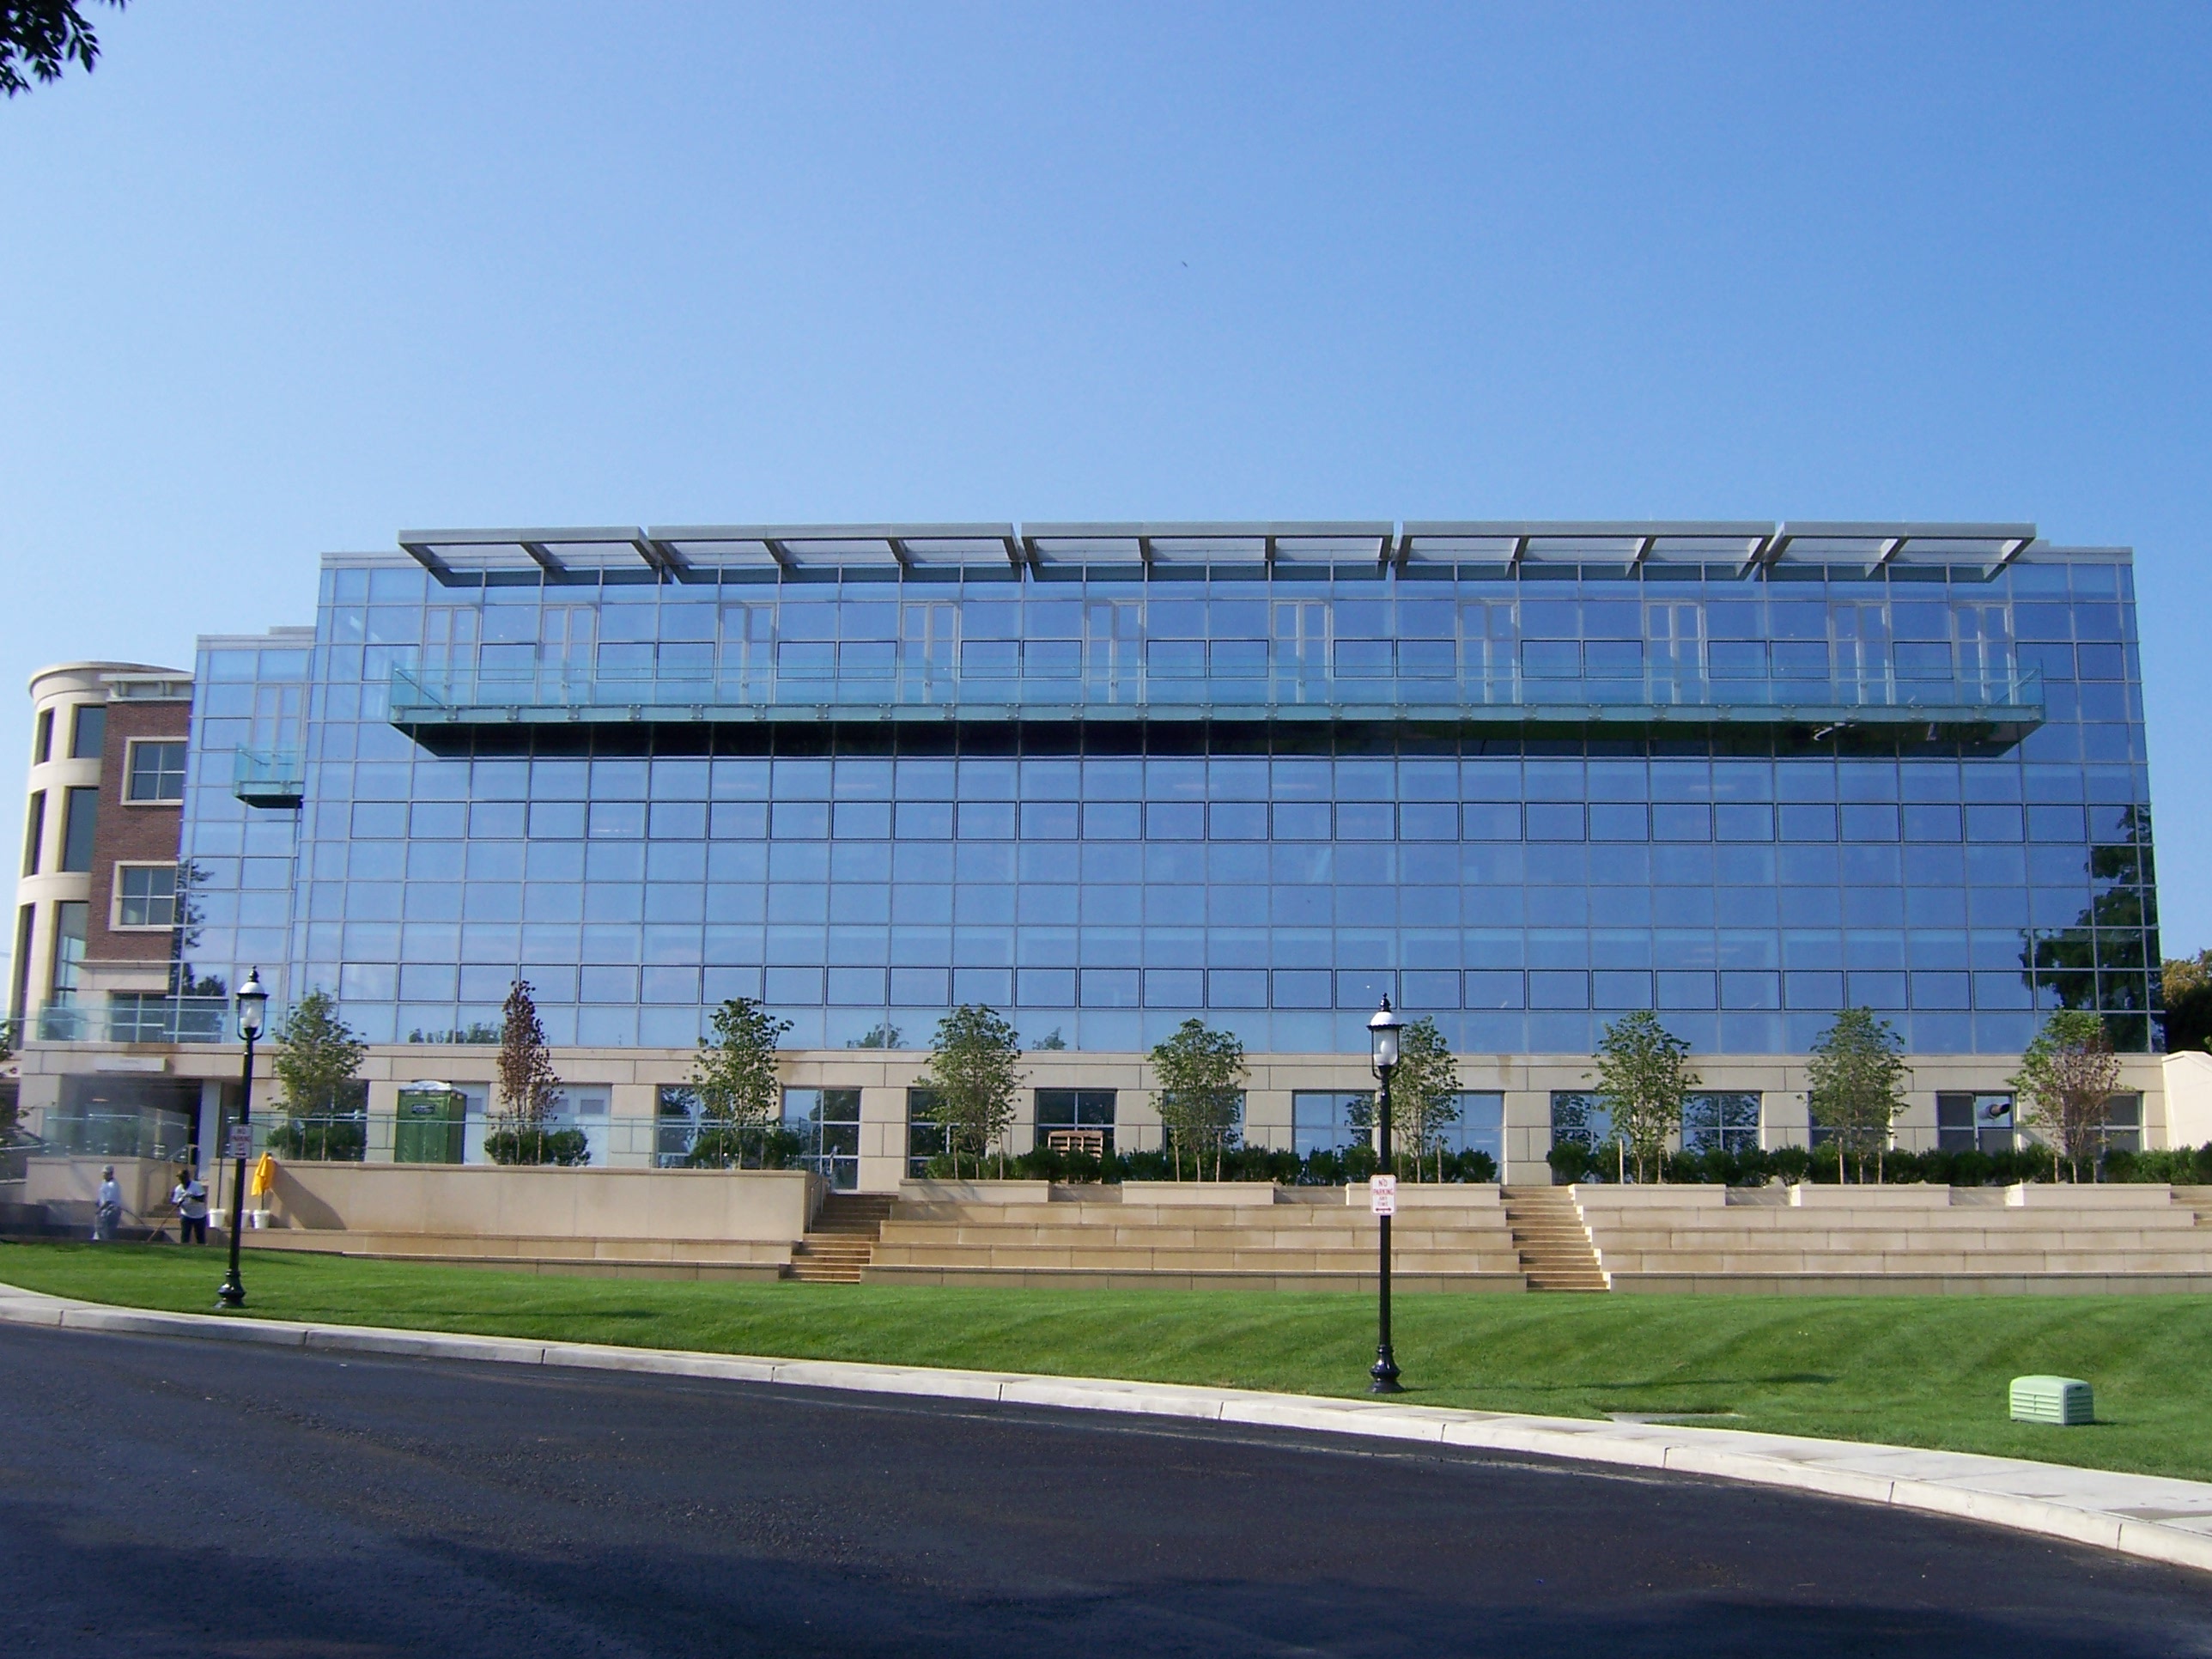 K. Hovnanian Corporate Headquarters